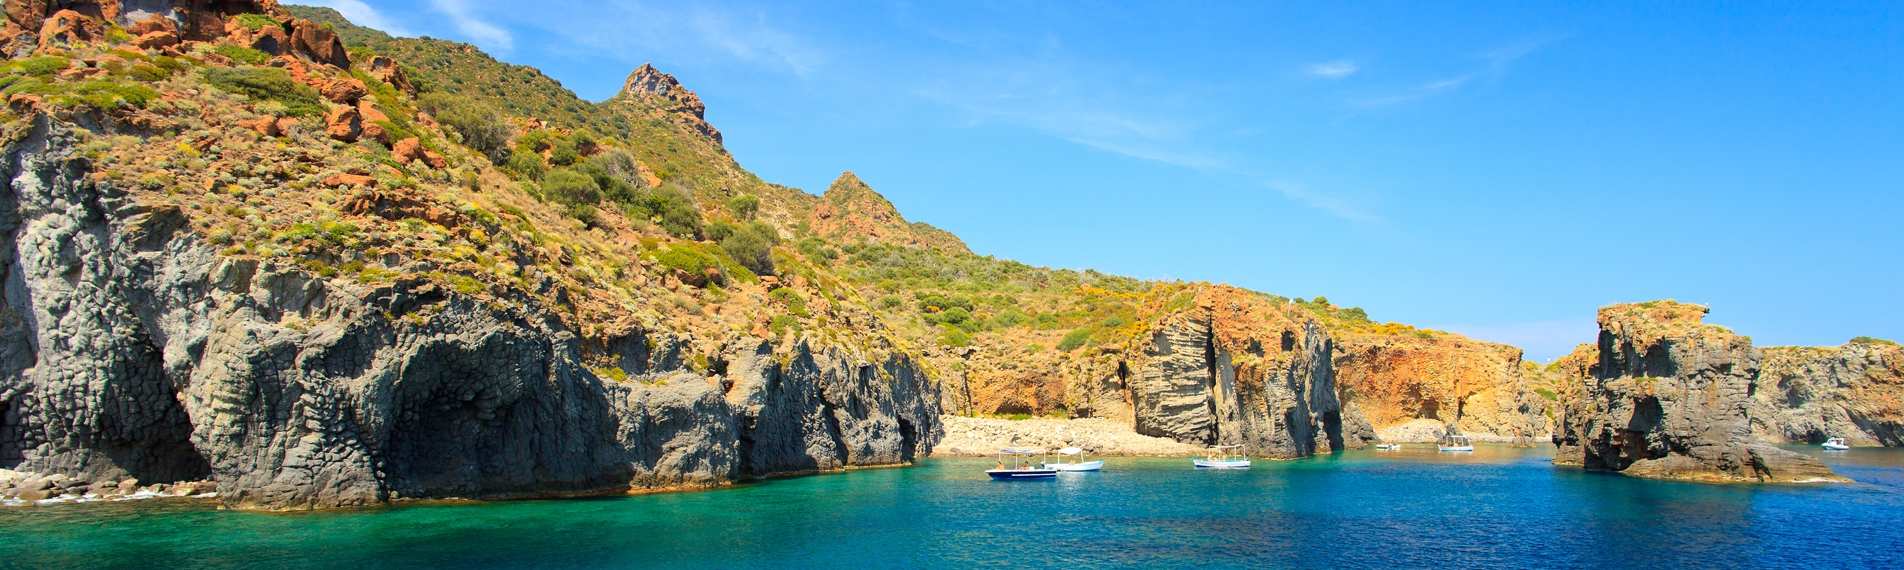 A rocky beach of the island of Panarea.